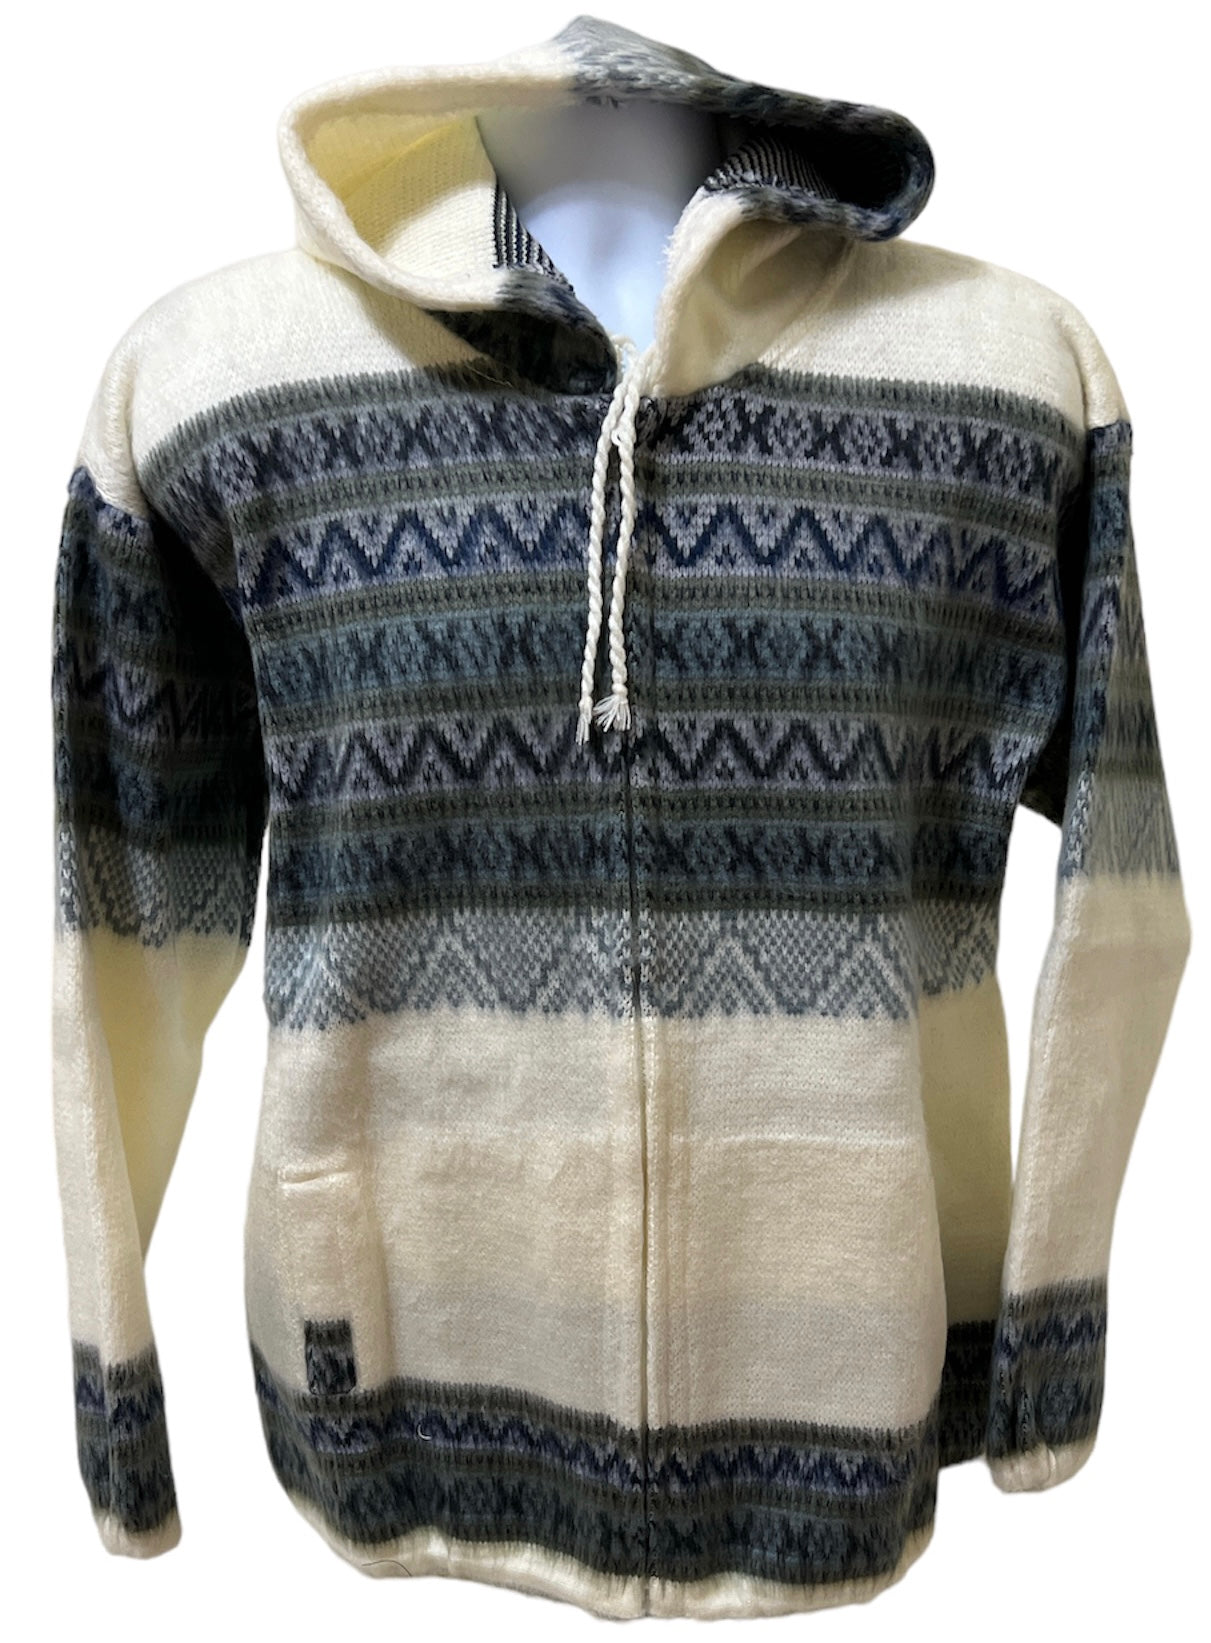 Alpaca White designed sweater/jacket